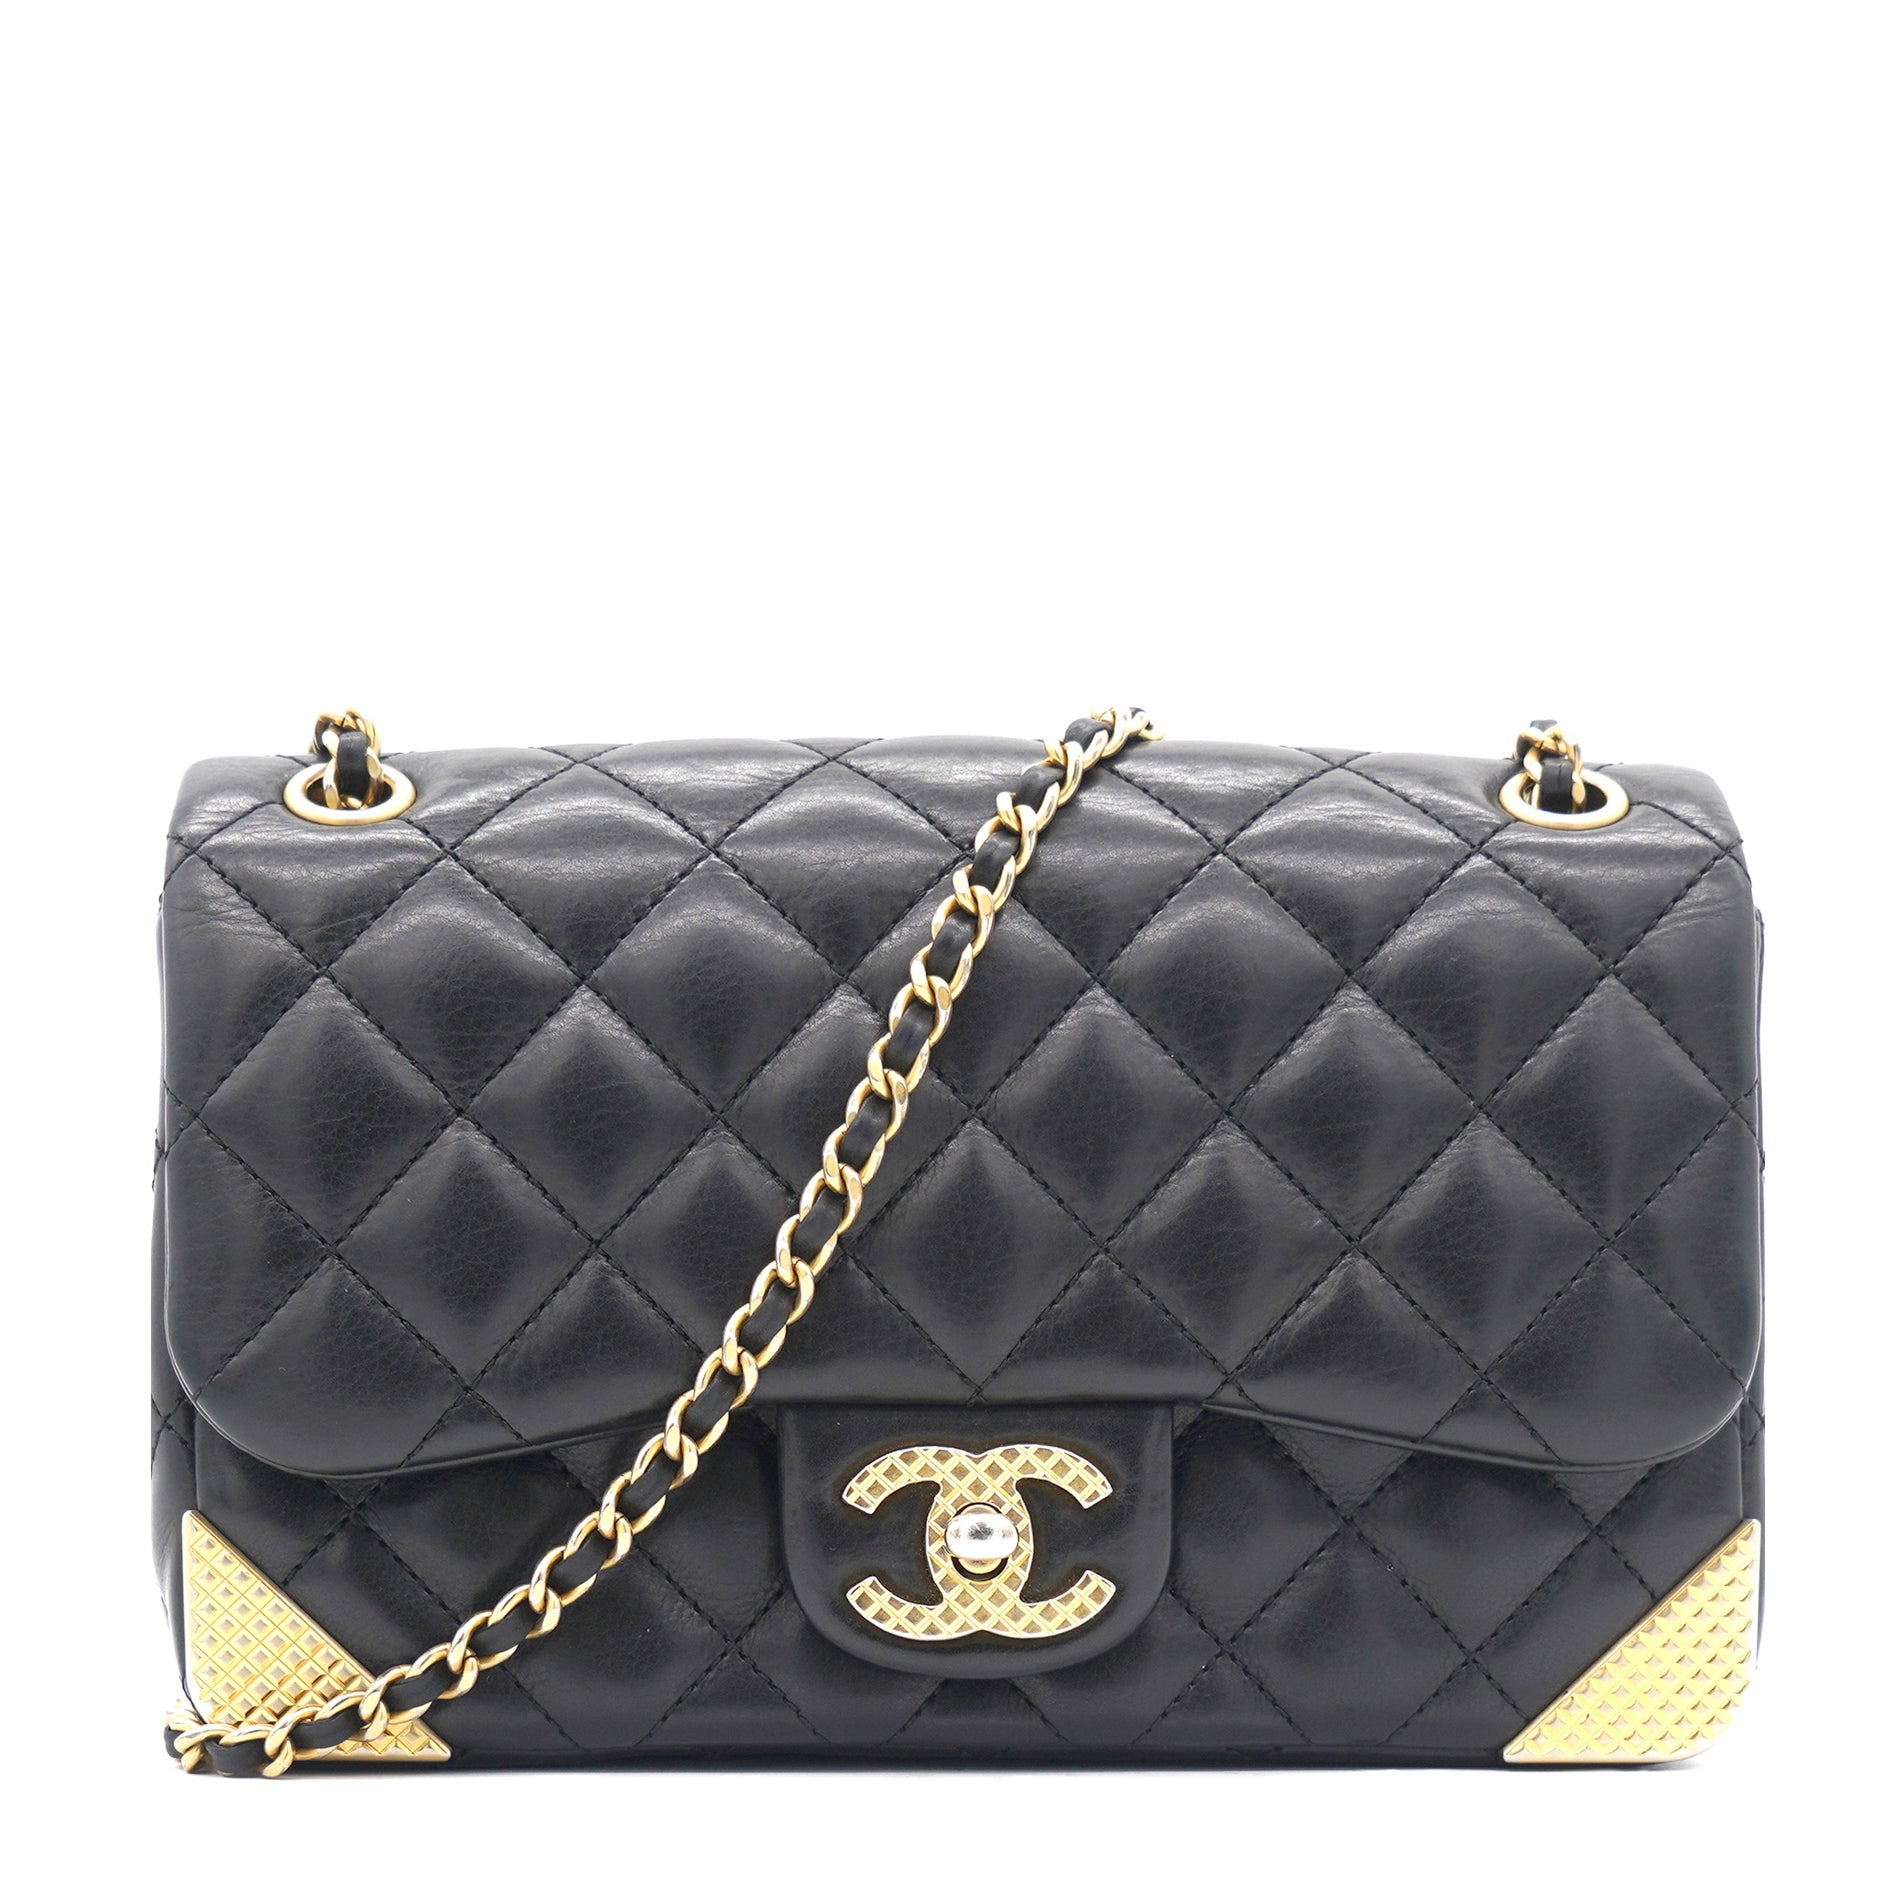 Chanel 2019 Small CC Chic Flap Bag - Metallic Shoulder Bags